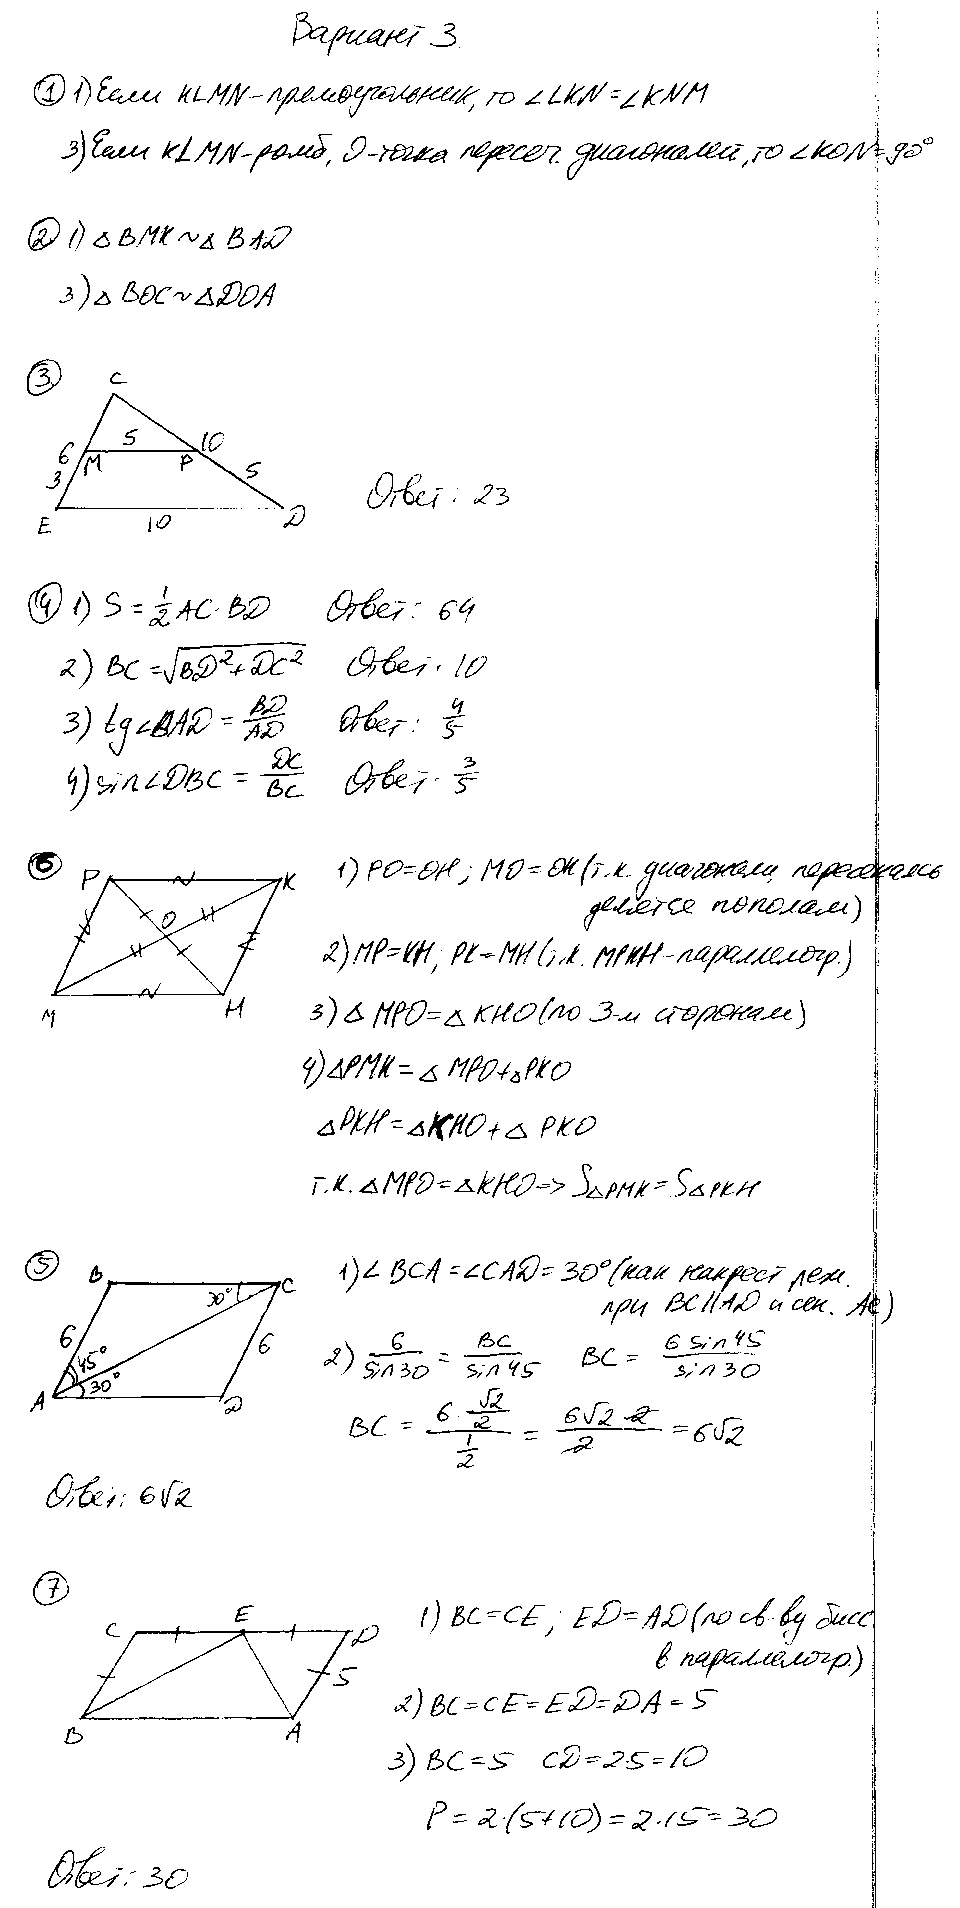 ГДЗ Геометрия 9 класс - Вариант 3